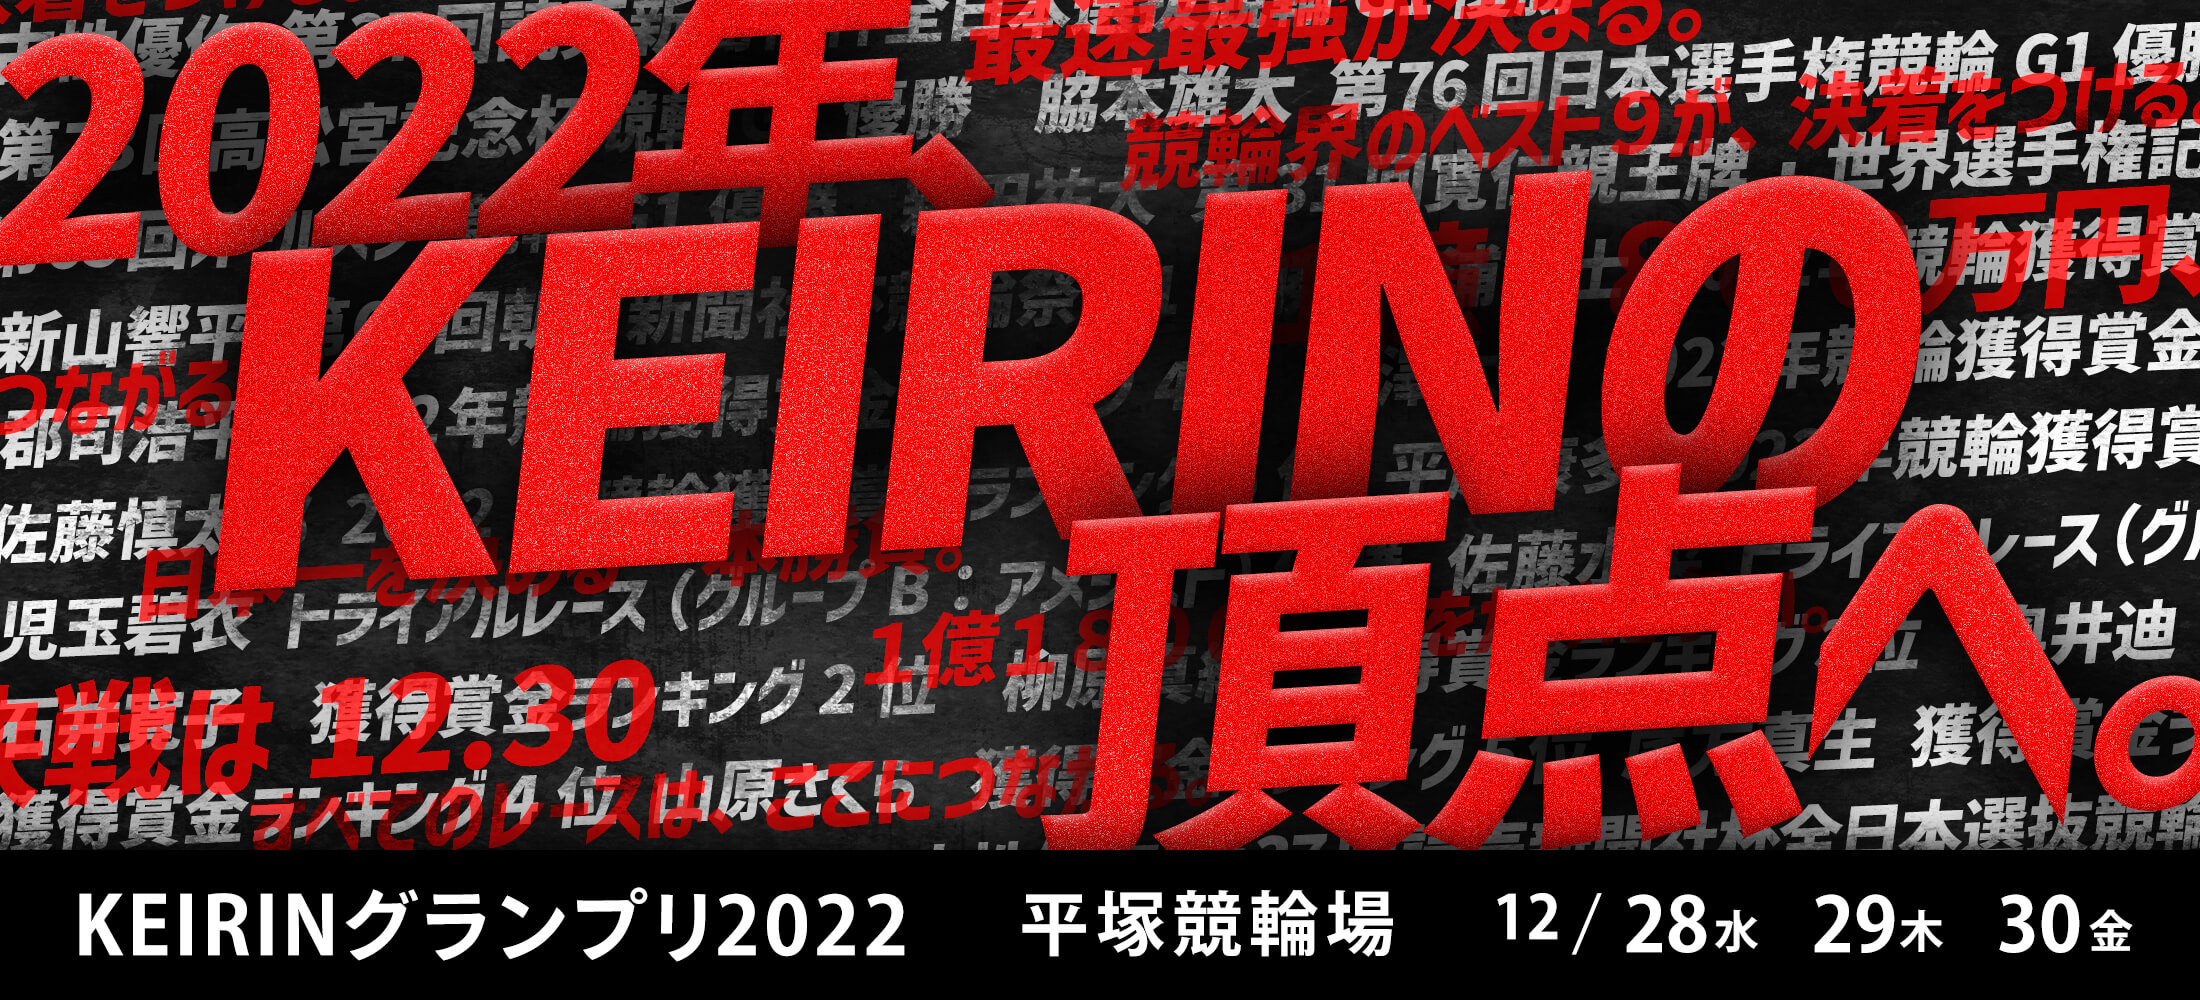 KEIRINグランプリ2022 平塚競輪場 12/28(水), 29(木), 30(金)